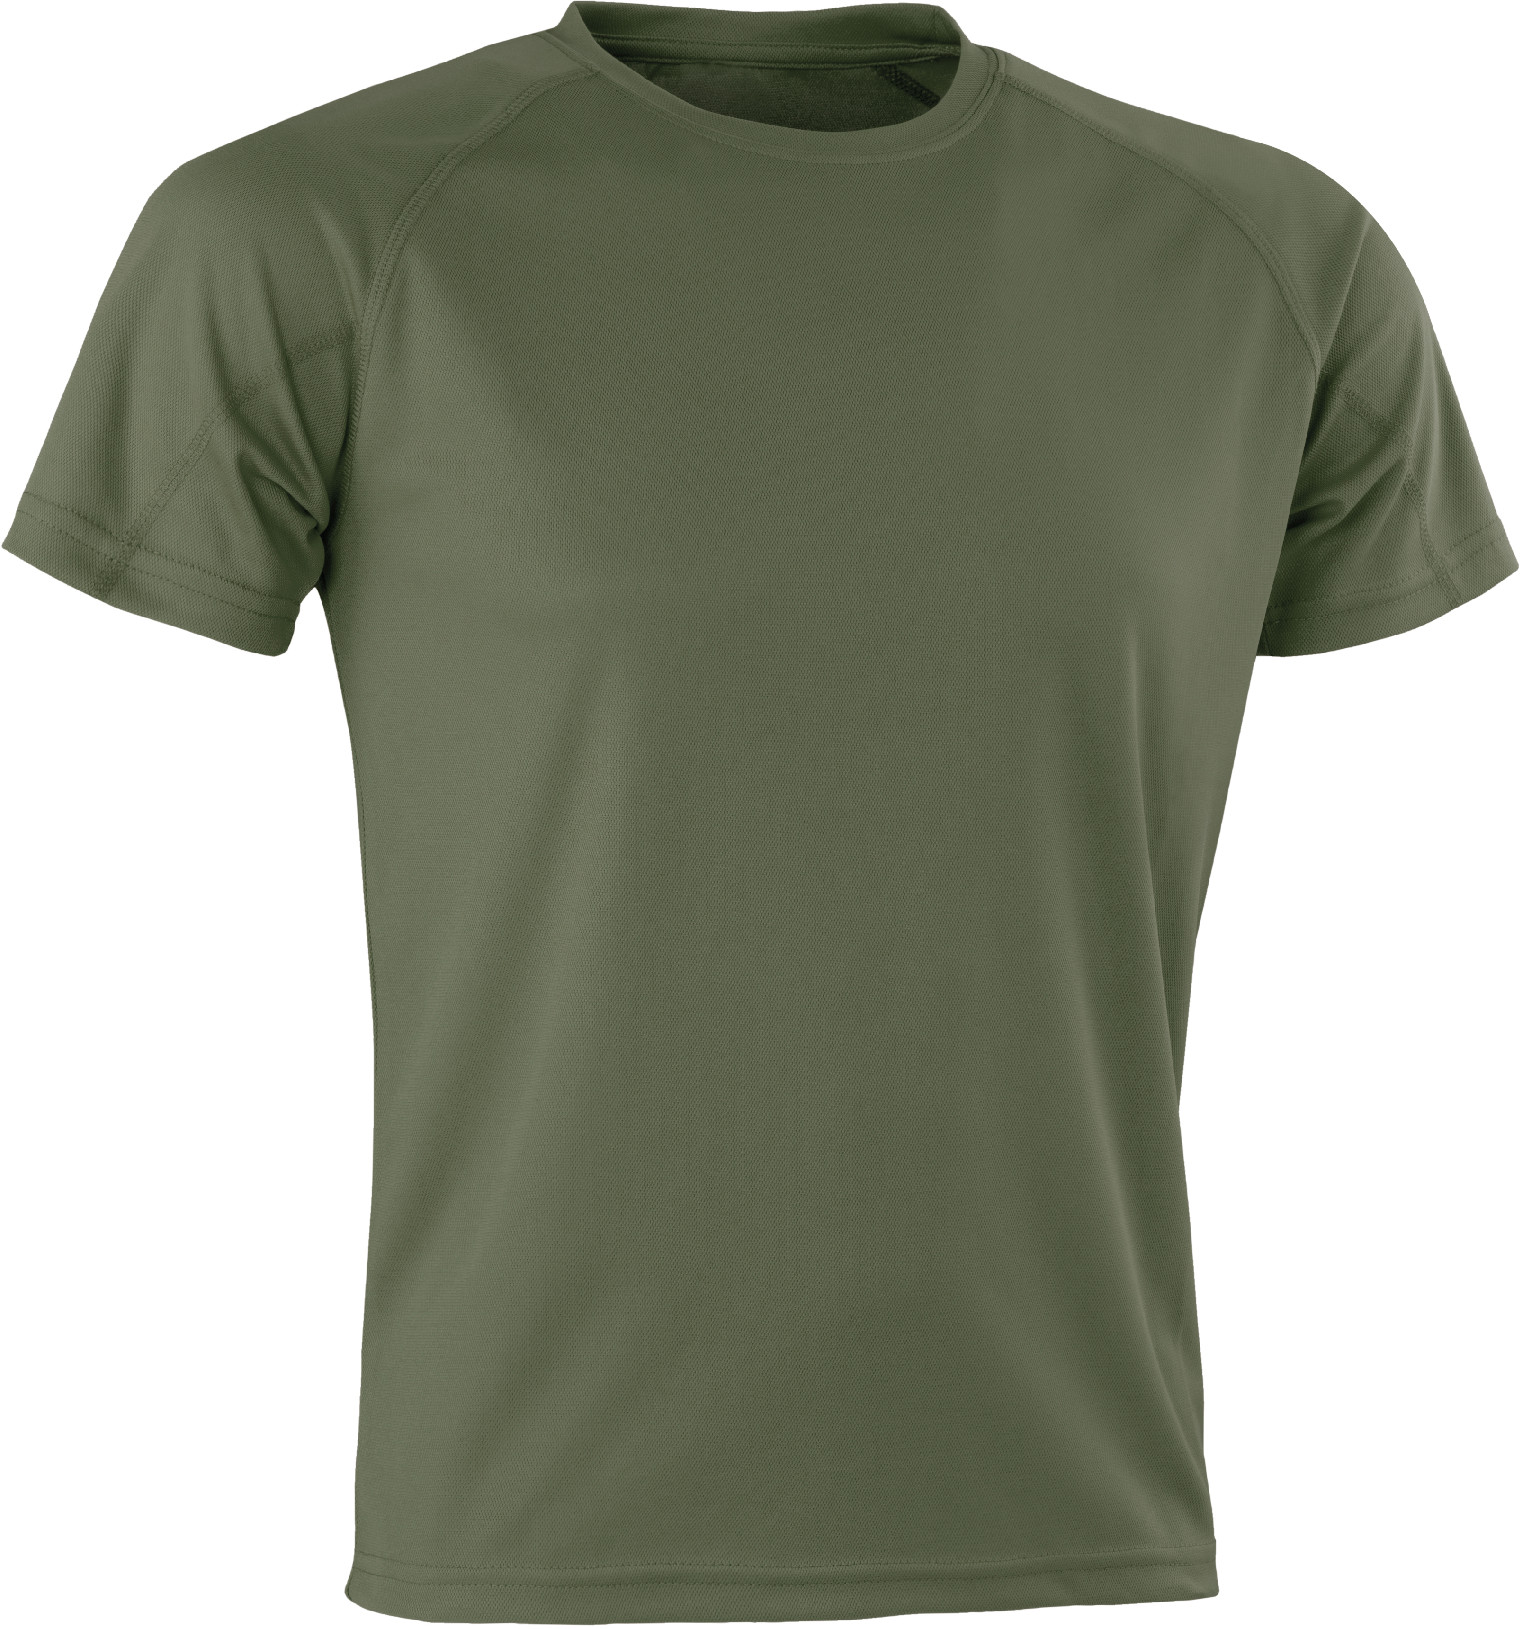 Sportovní tričko Aircool S287X Barva: khaki, Velikost: M